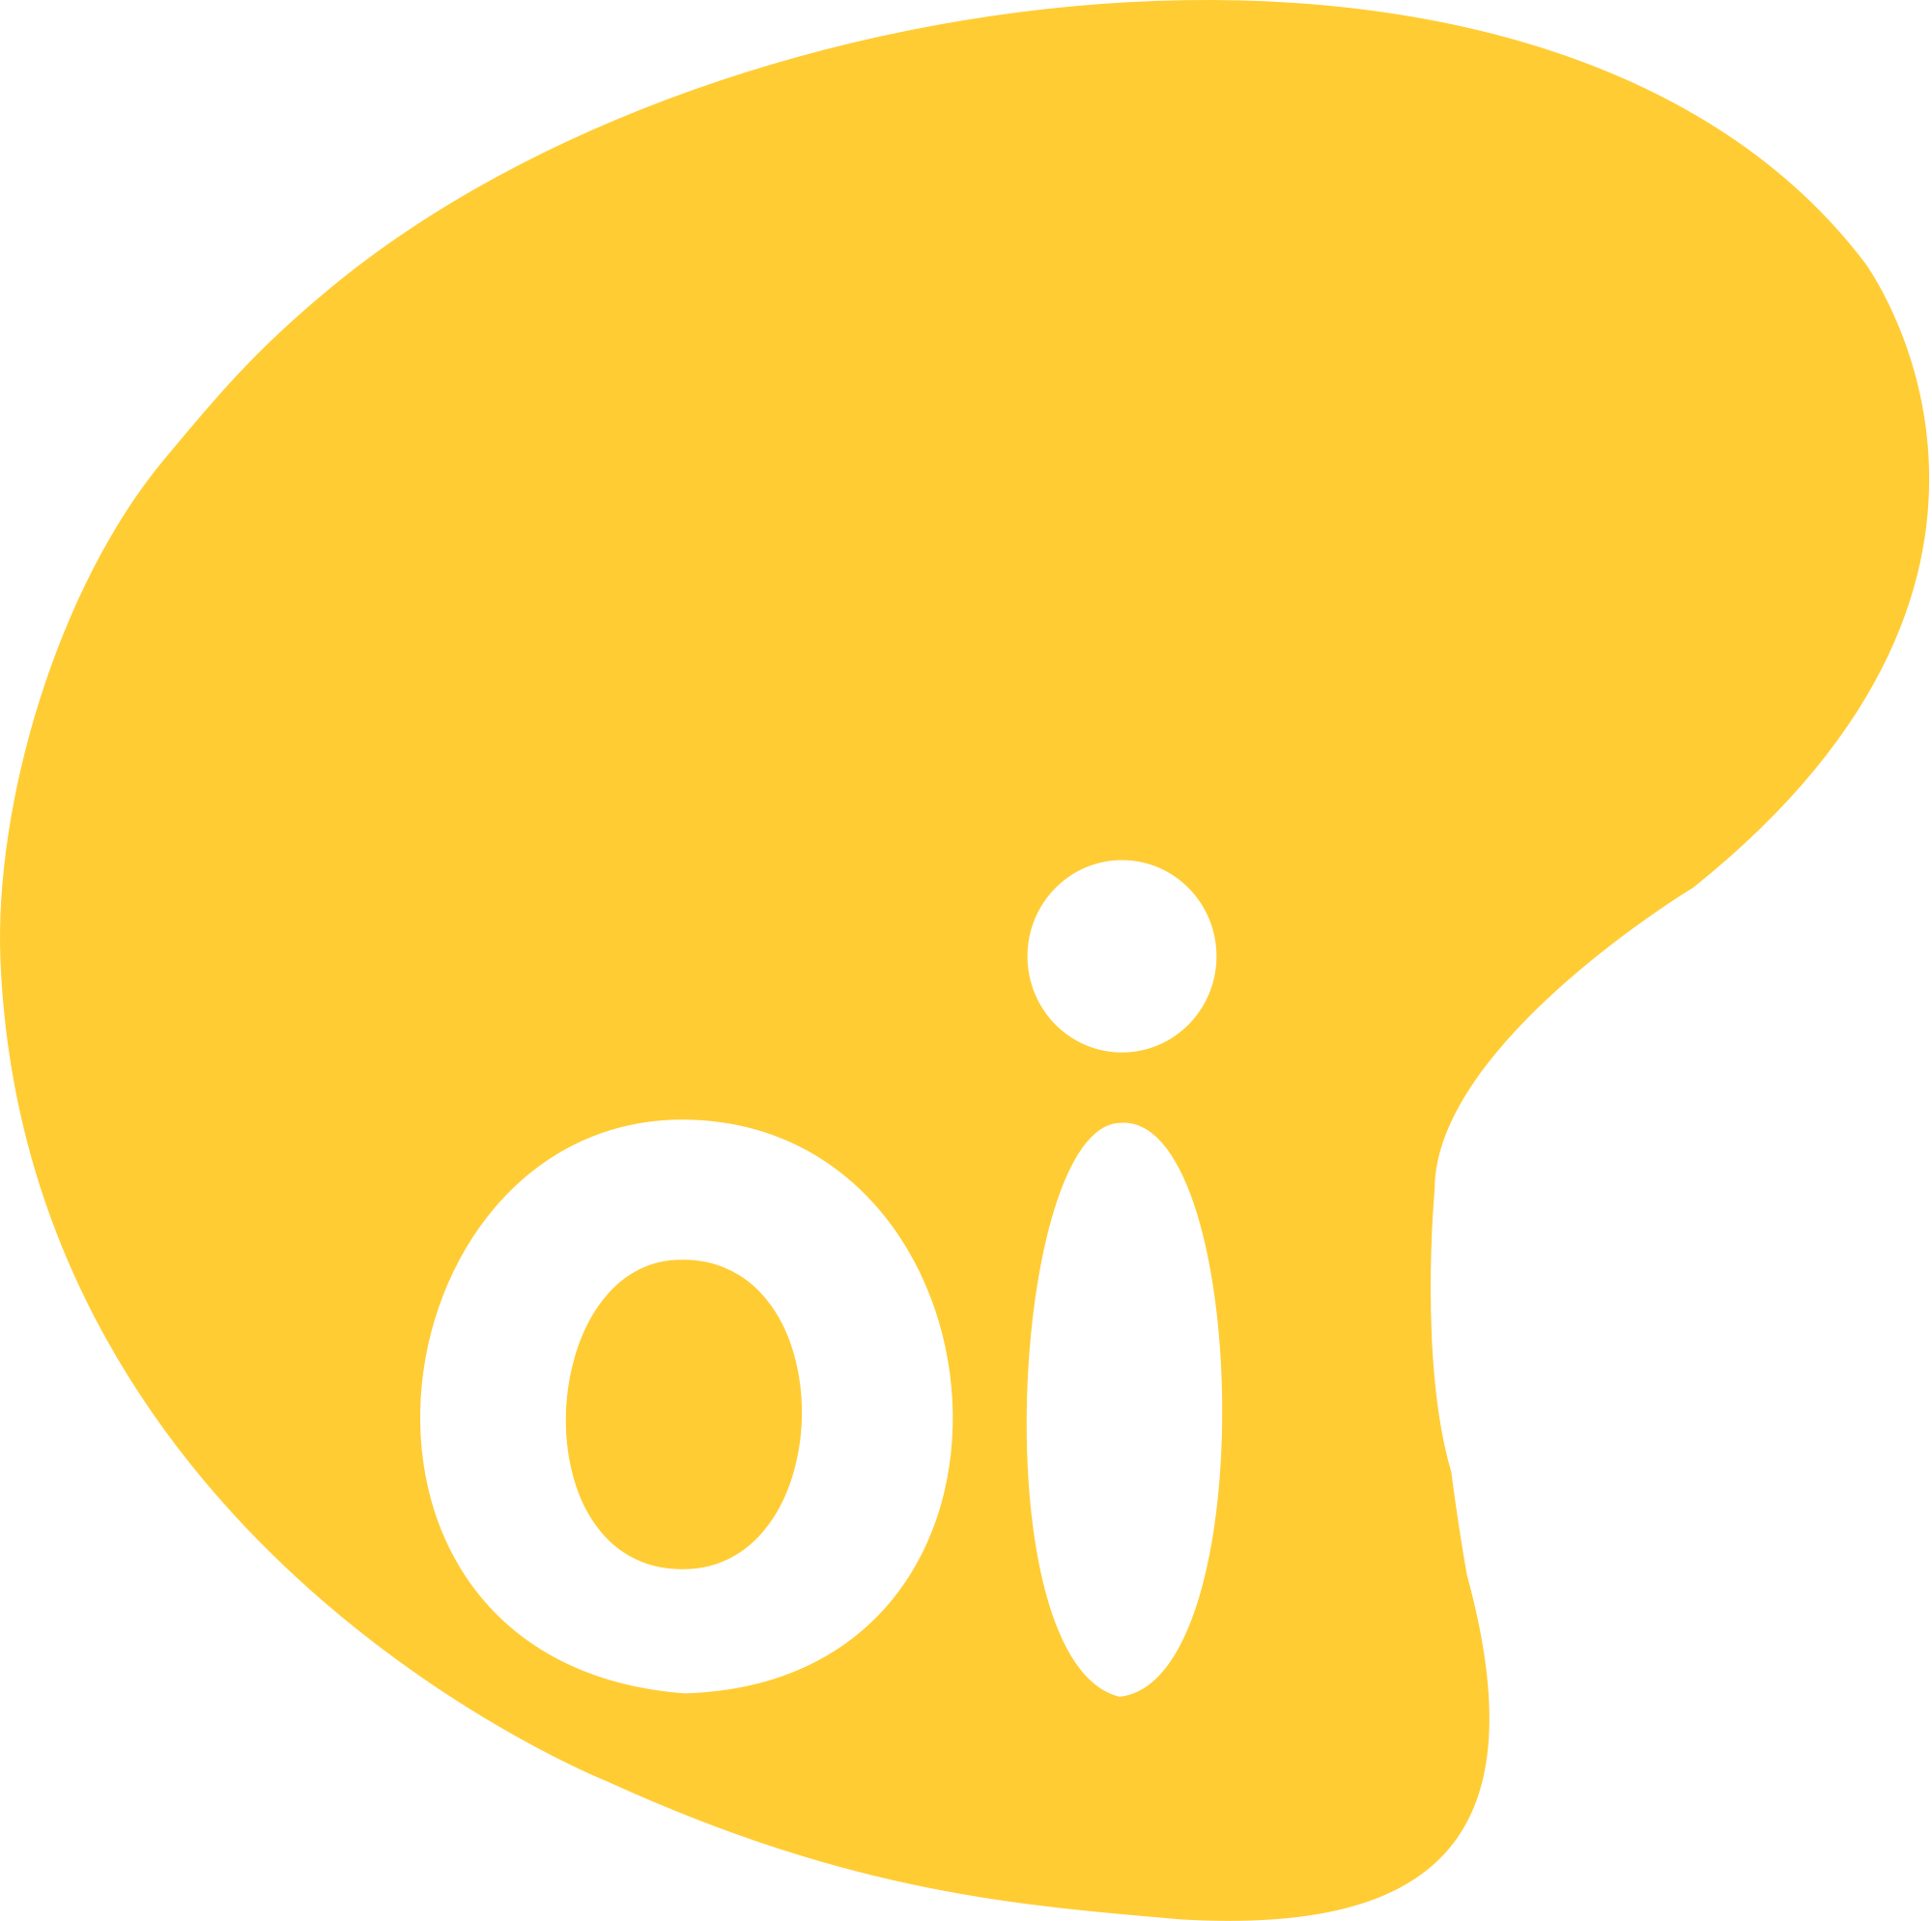 Oi Logo Wallpaper